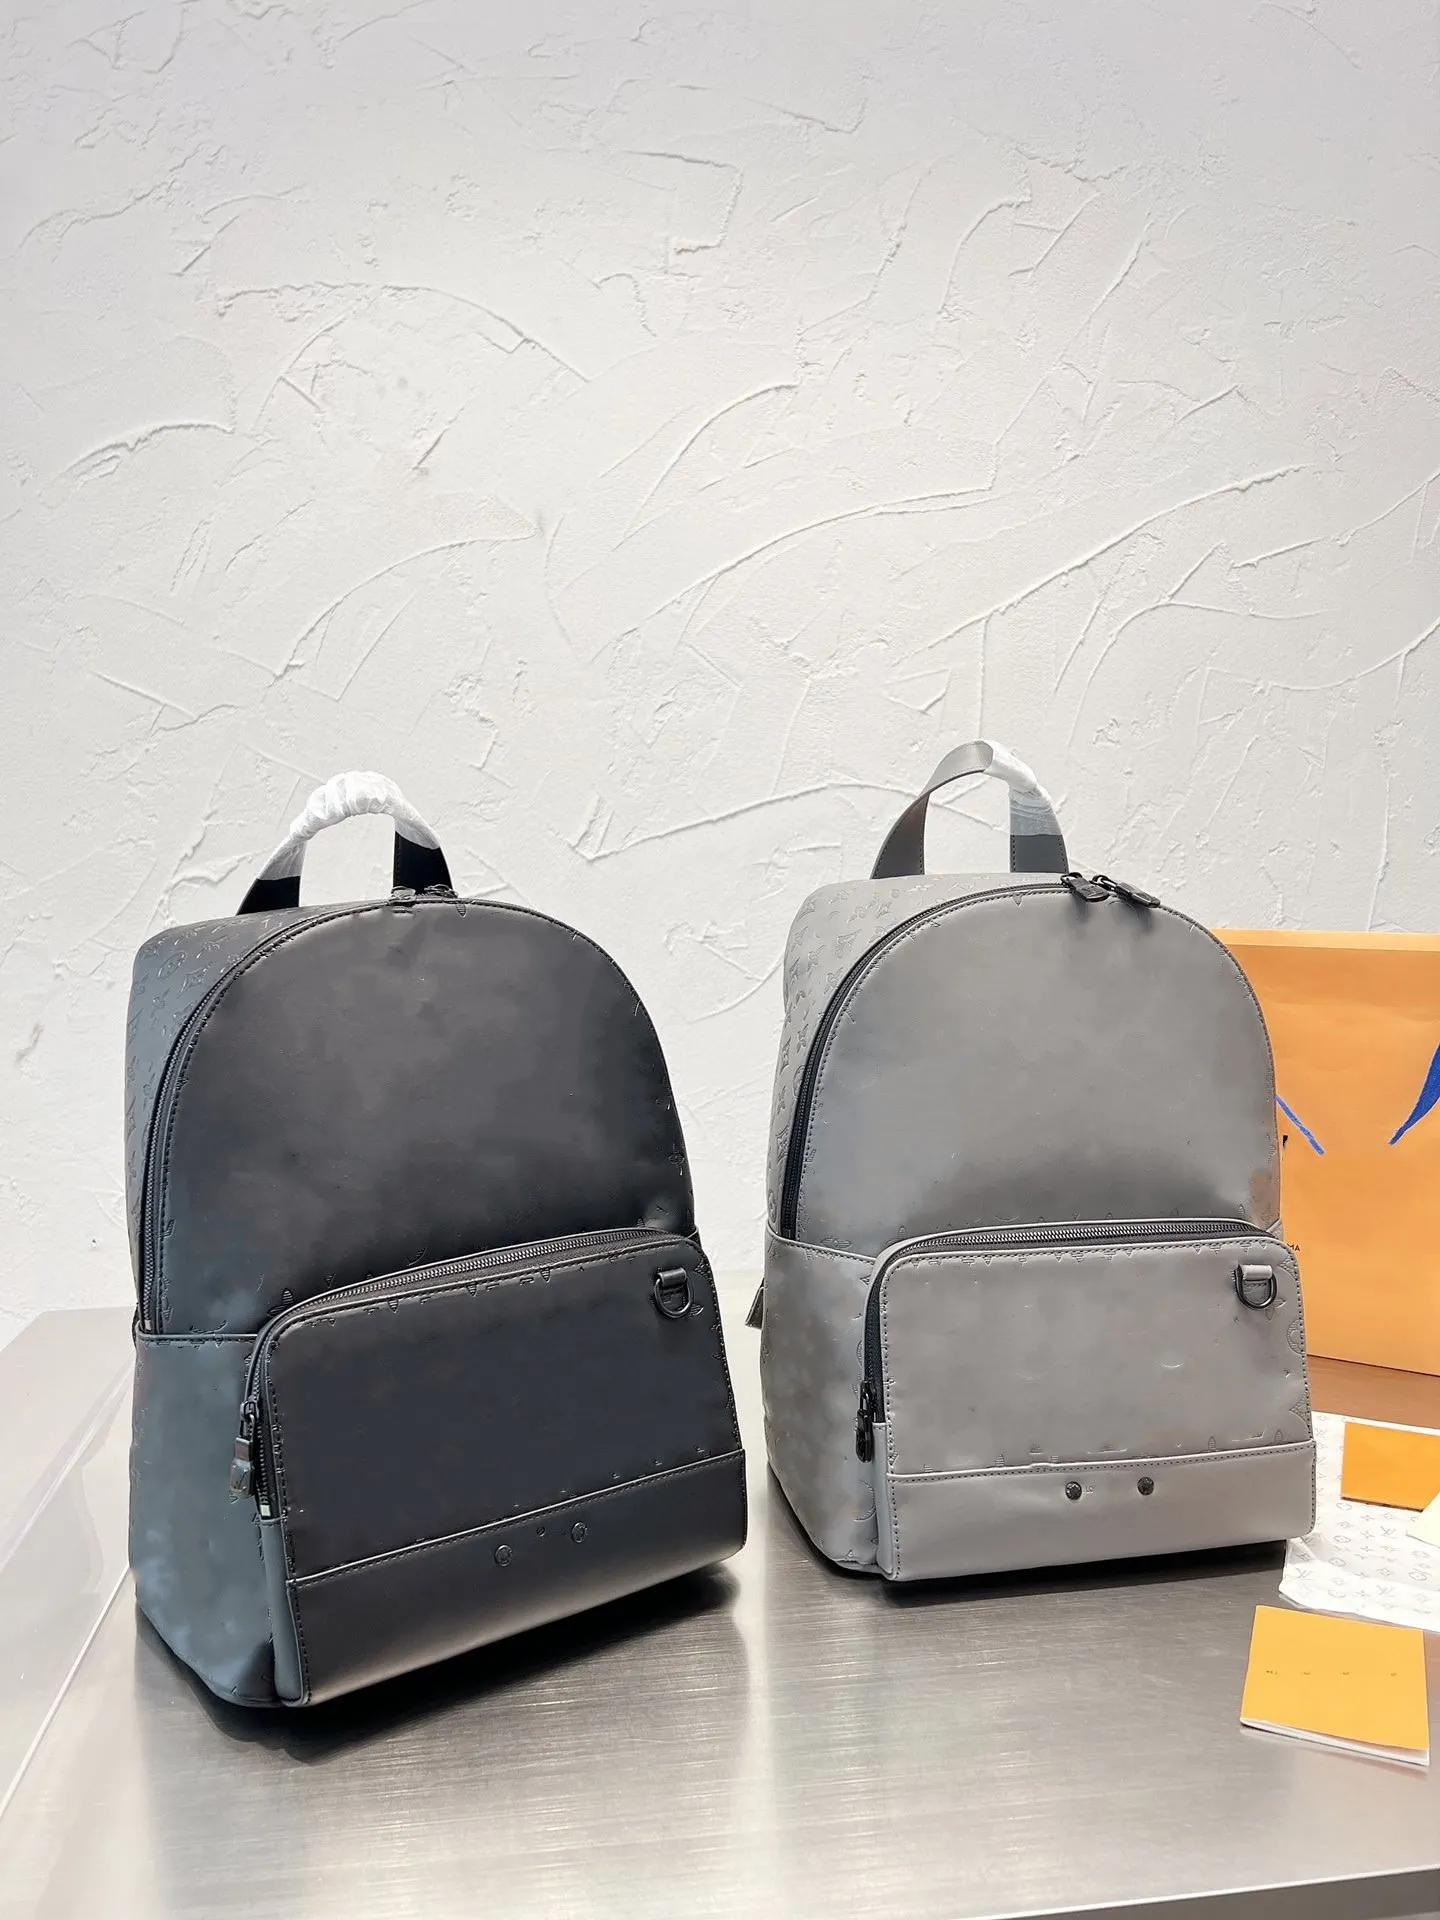 designer bag designer backpack new fashion luxury backpack various styles super capacity versatile women travel school bags handbag purse